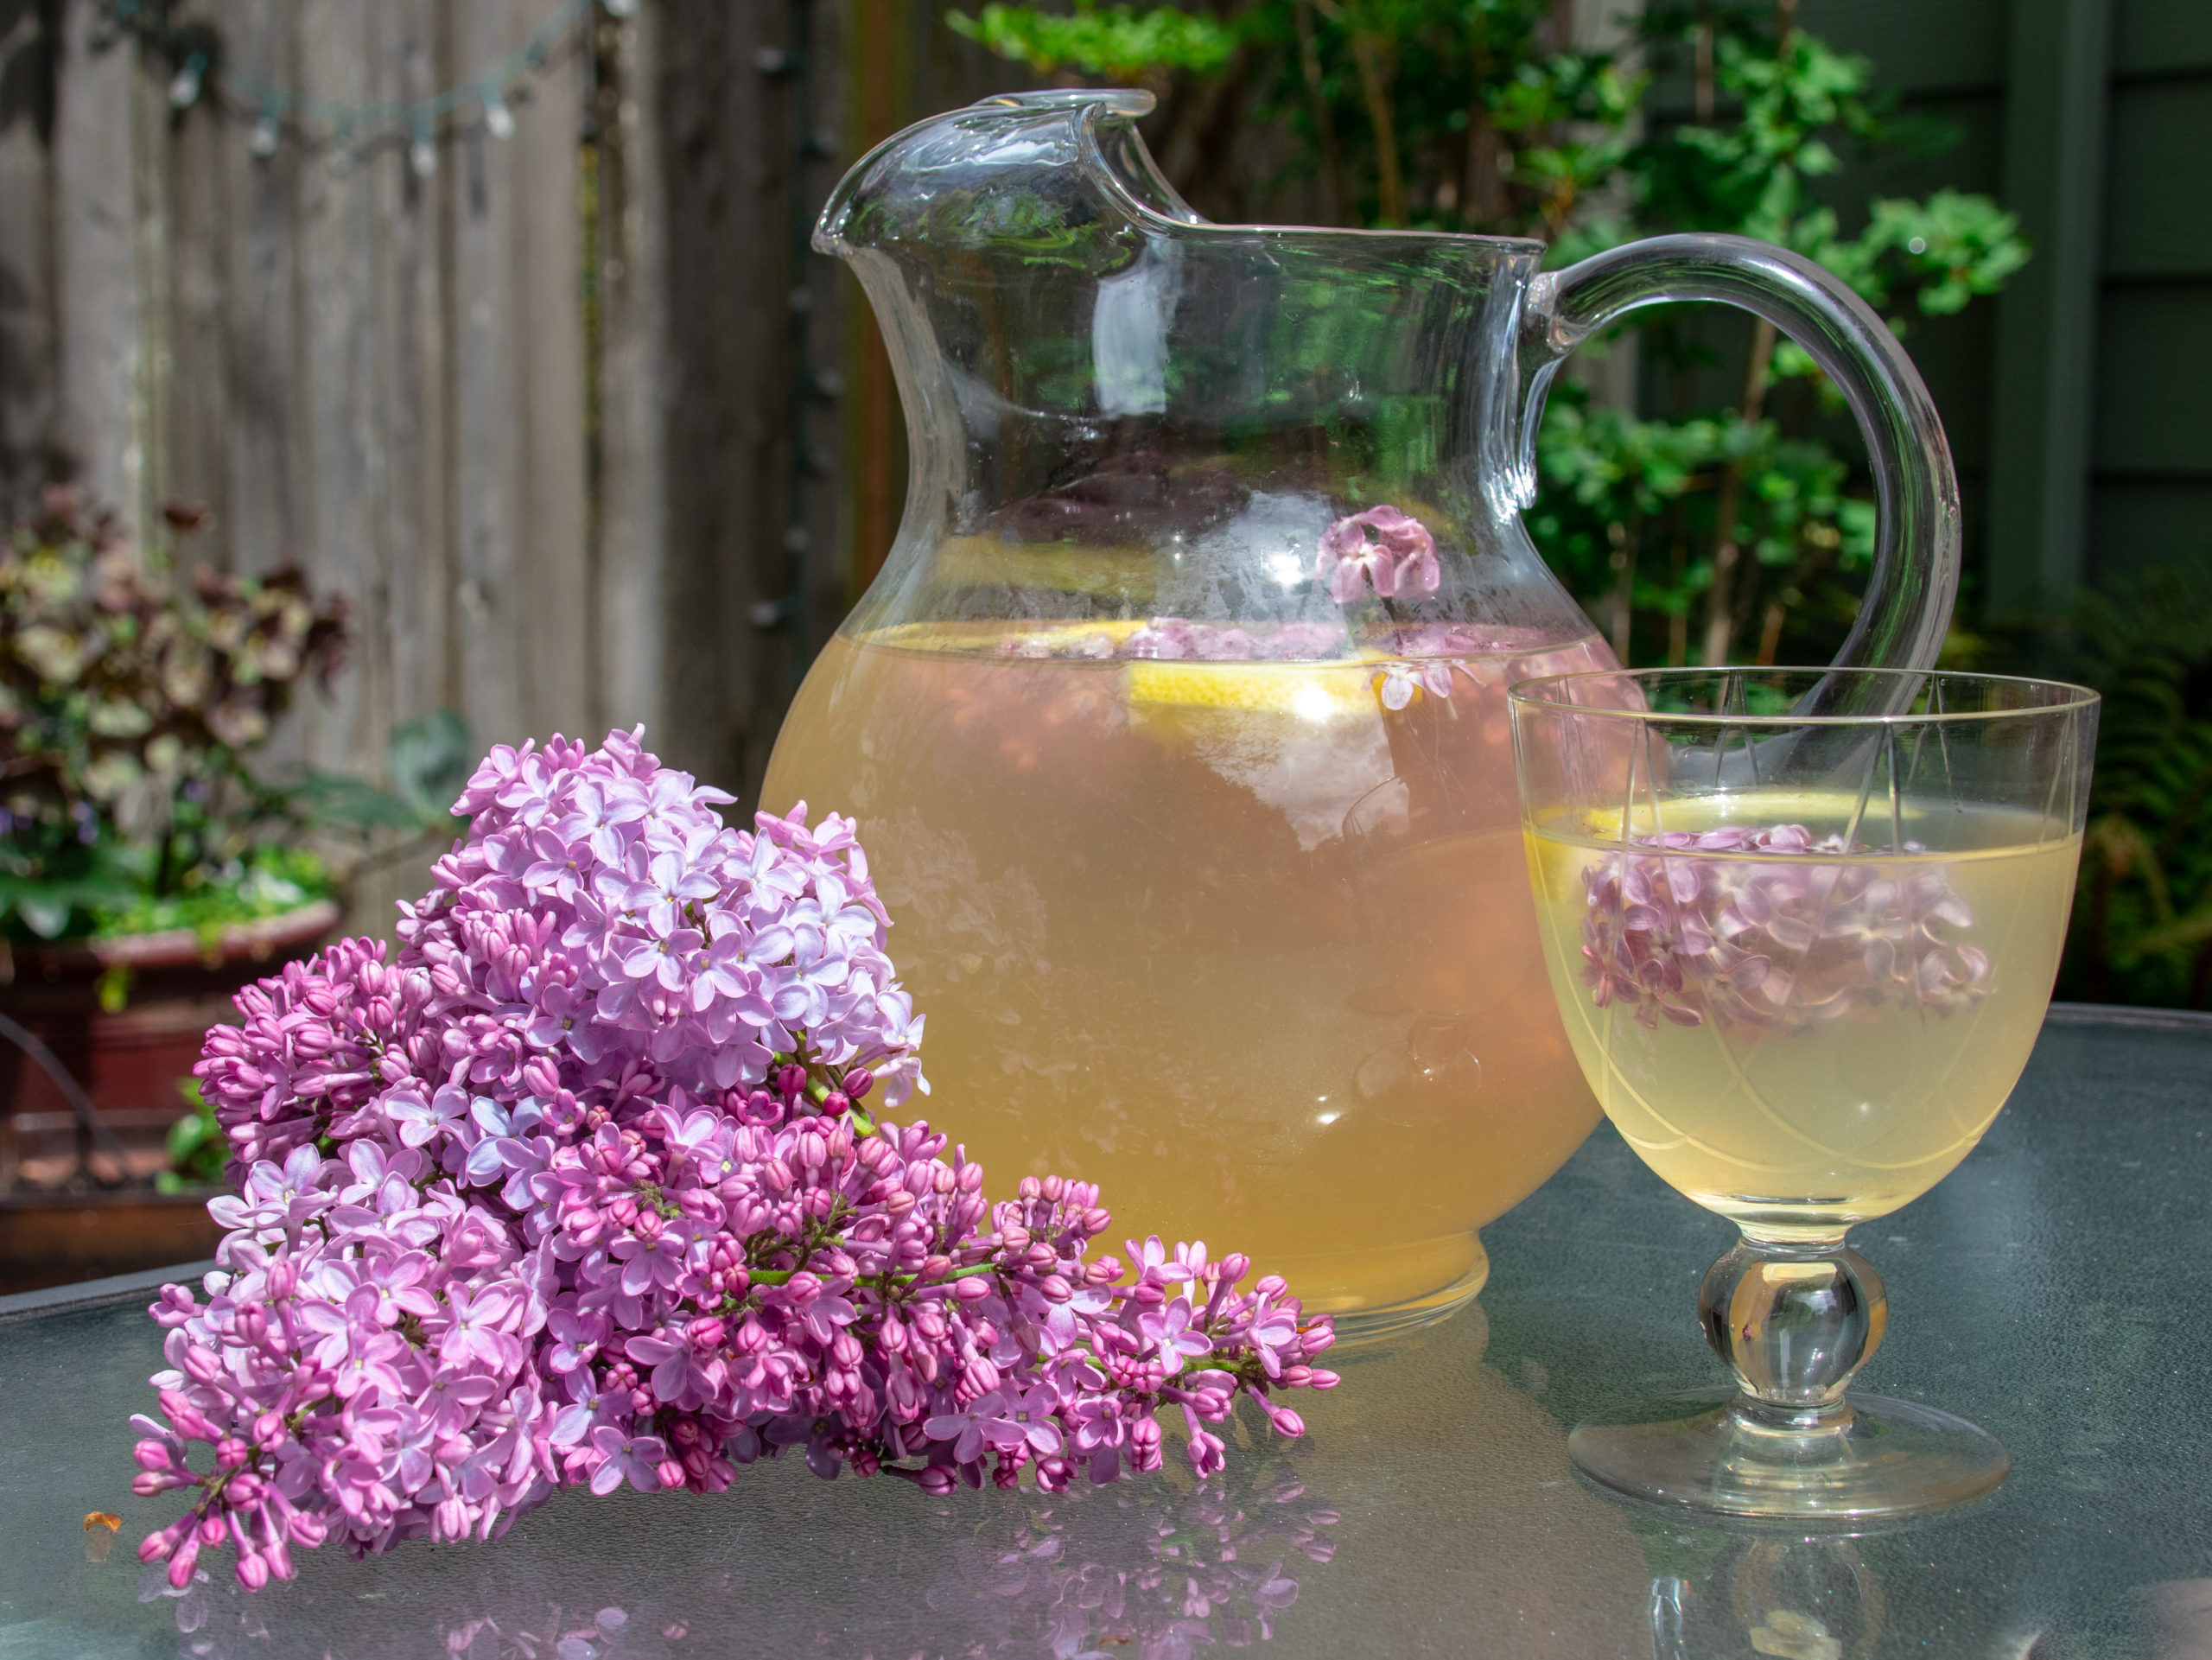 Delicious Lilac Lemonade Recipe and Health Benefits